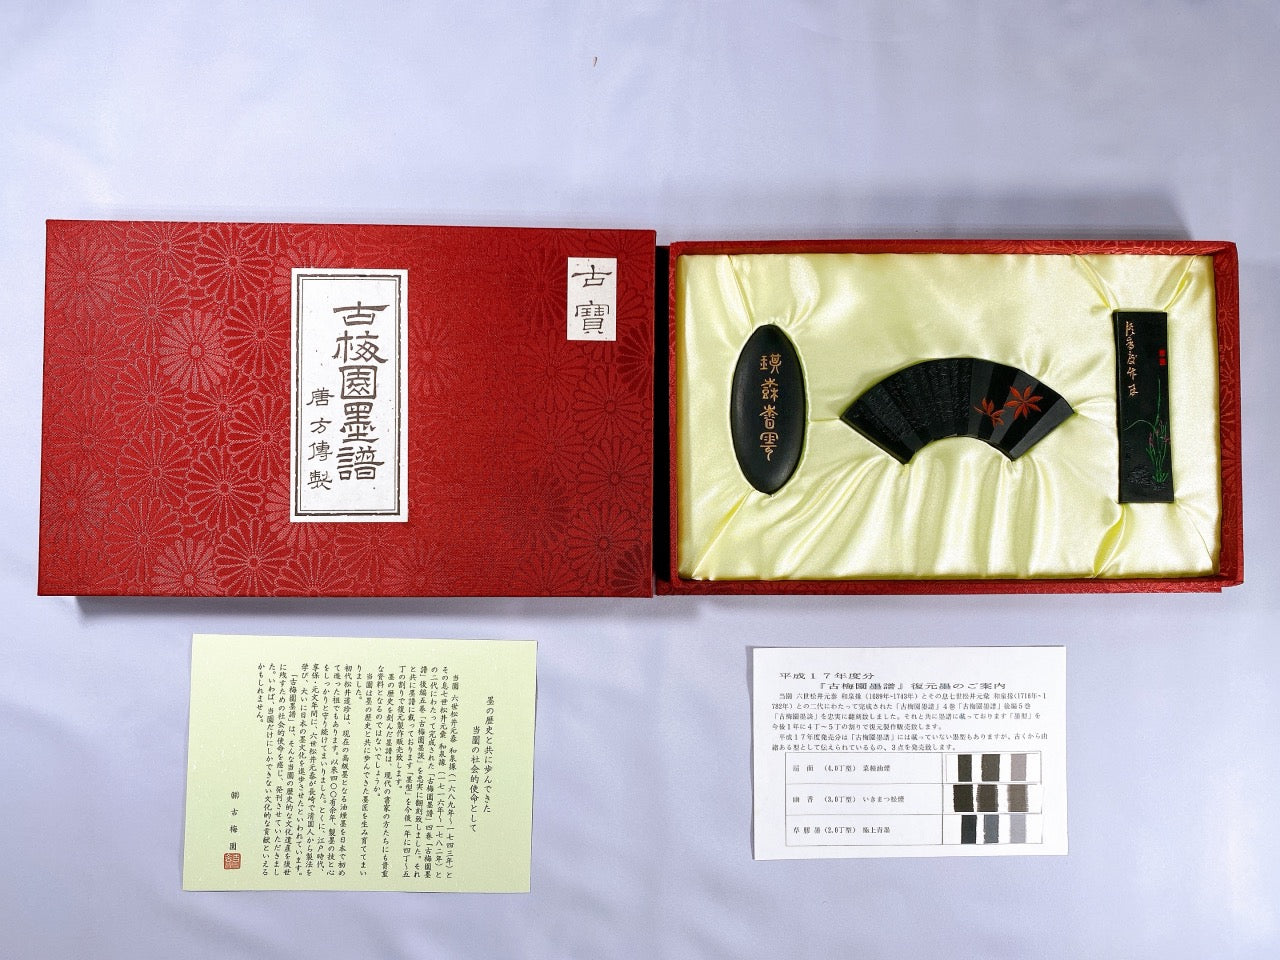 Bokufu 2005 - Kobaien's special inkstick year selection ( 古梅園墨譜2005 )